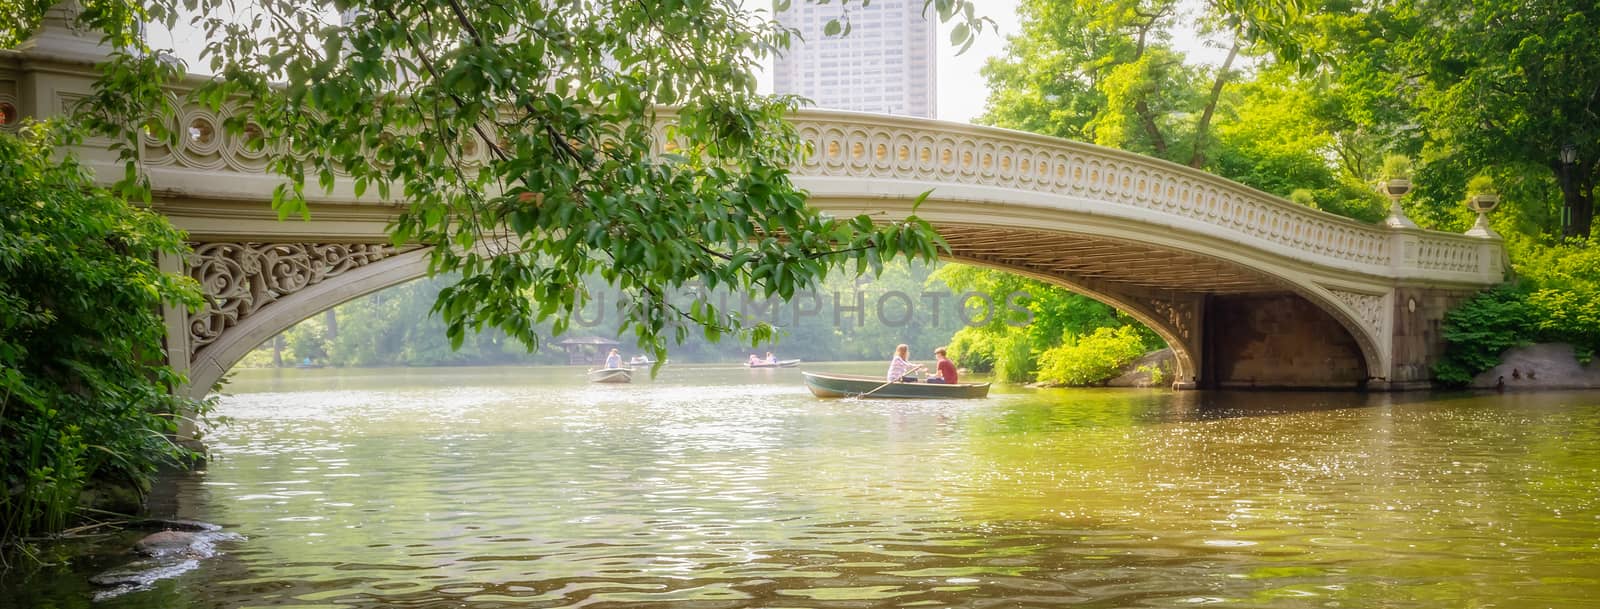 Scenic bridge in Central Park on a sunny day, Manhattan, New York City, USA